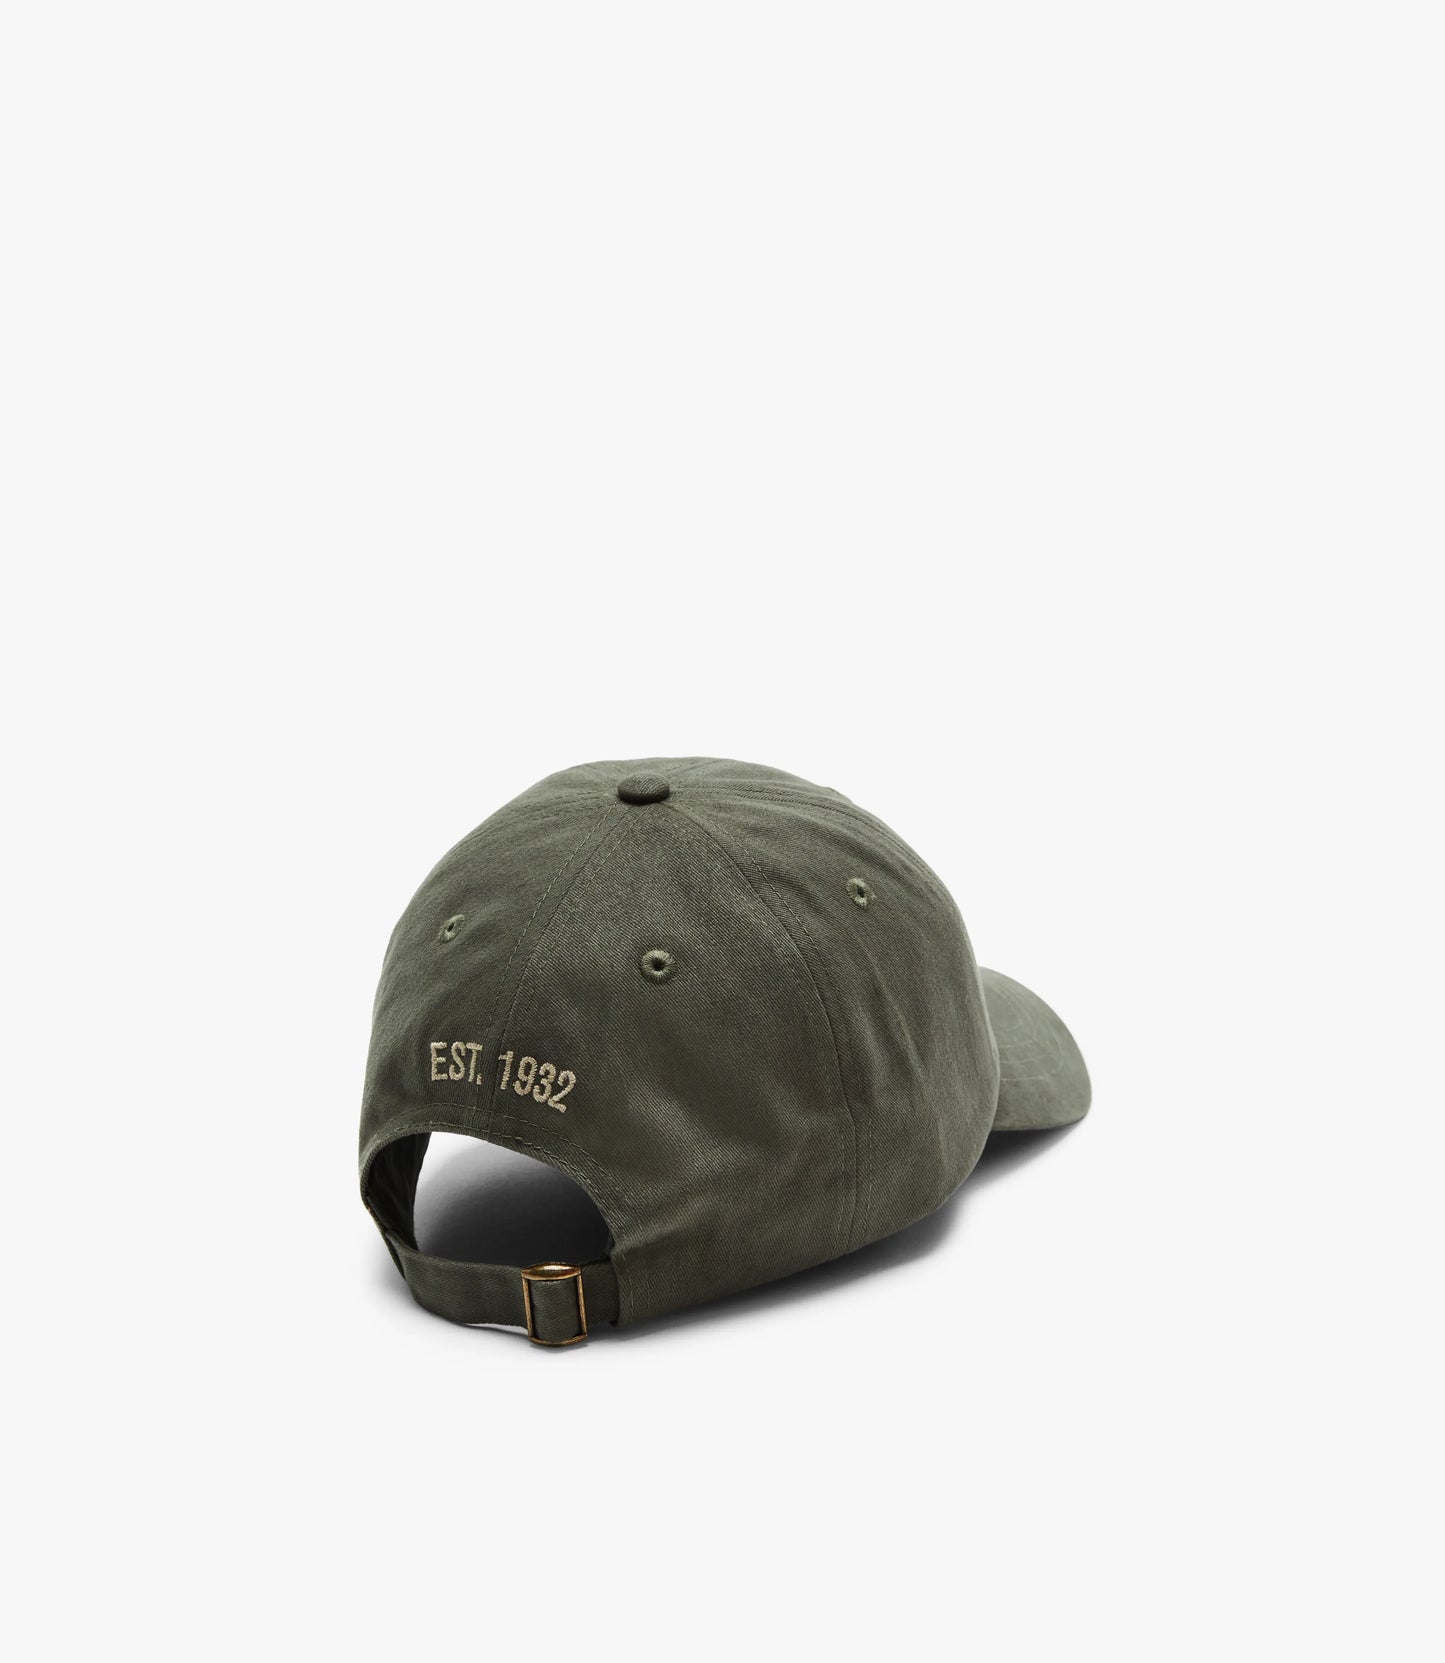 Mini Longhorn Cap - Military